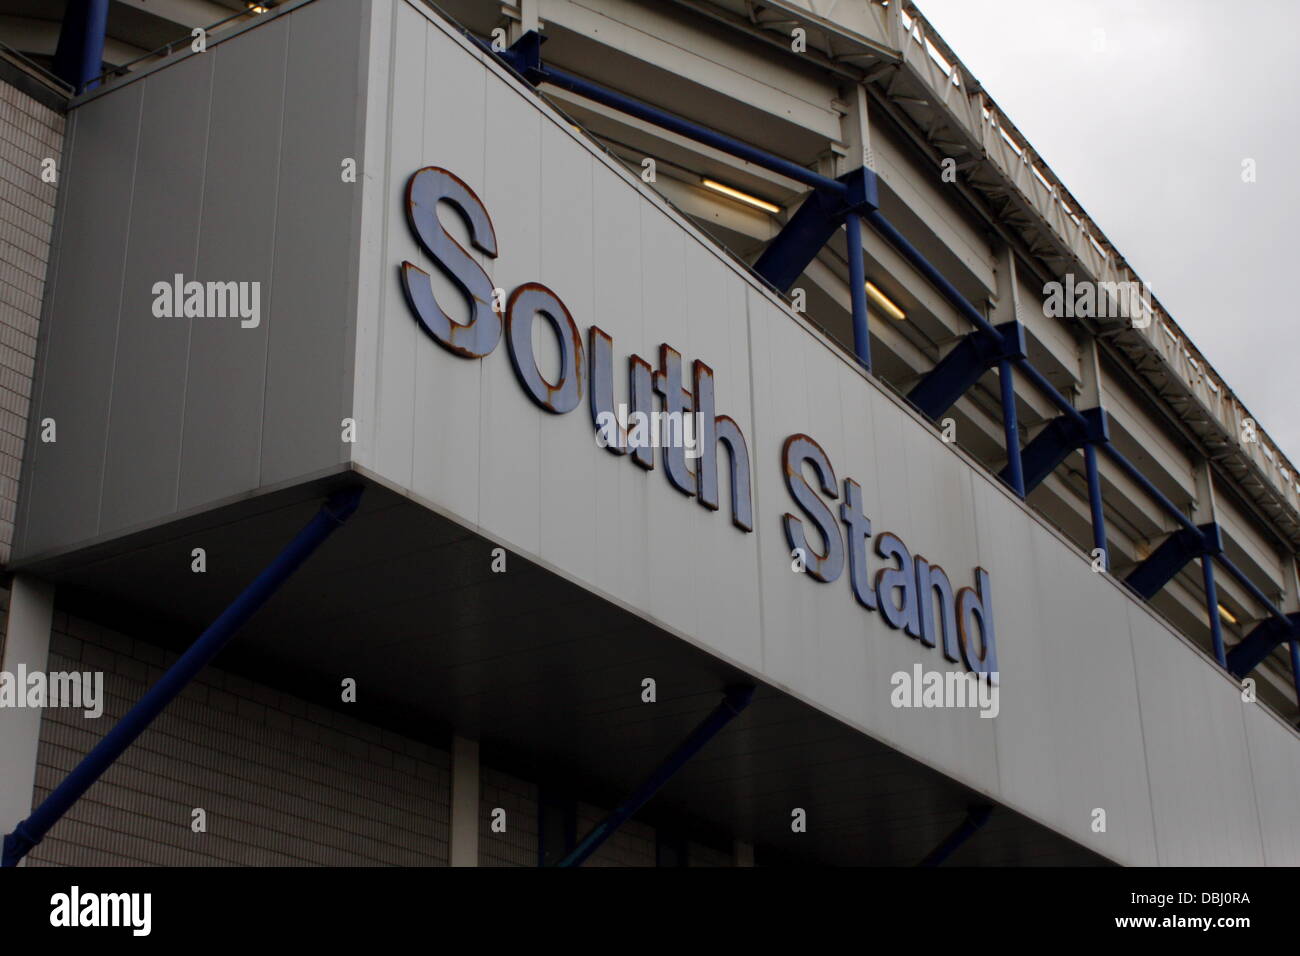 White Hart Lane Stadium, home of Tottenham Hotspur Football Club Stock Photo